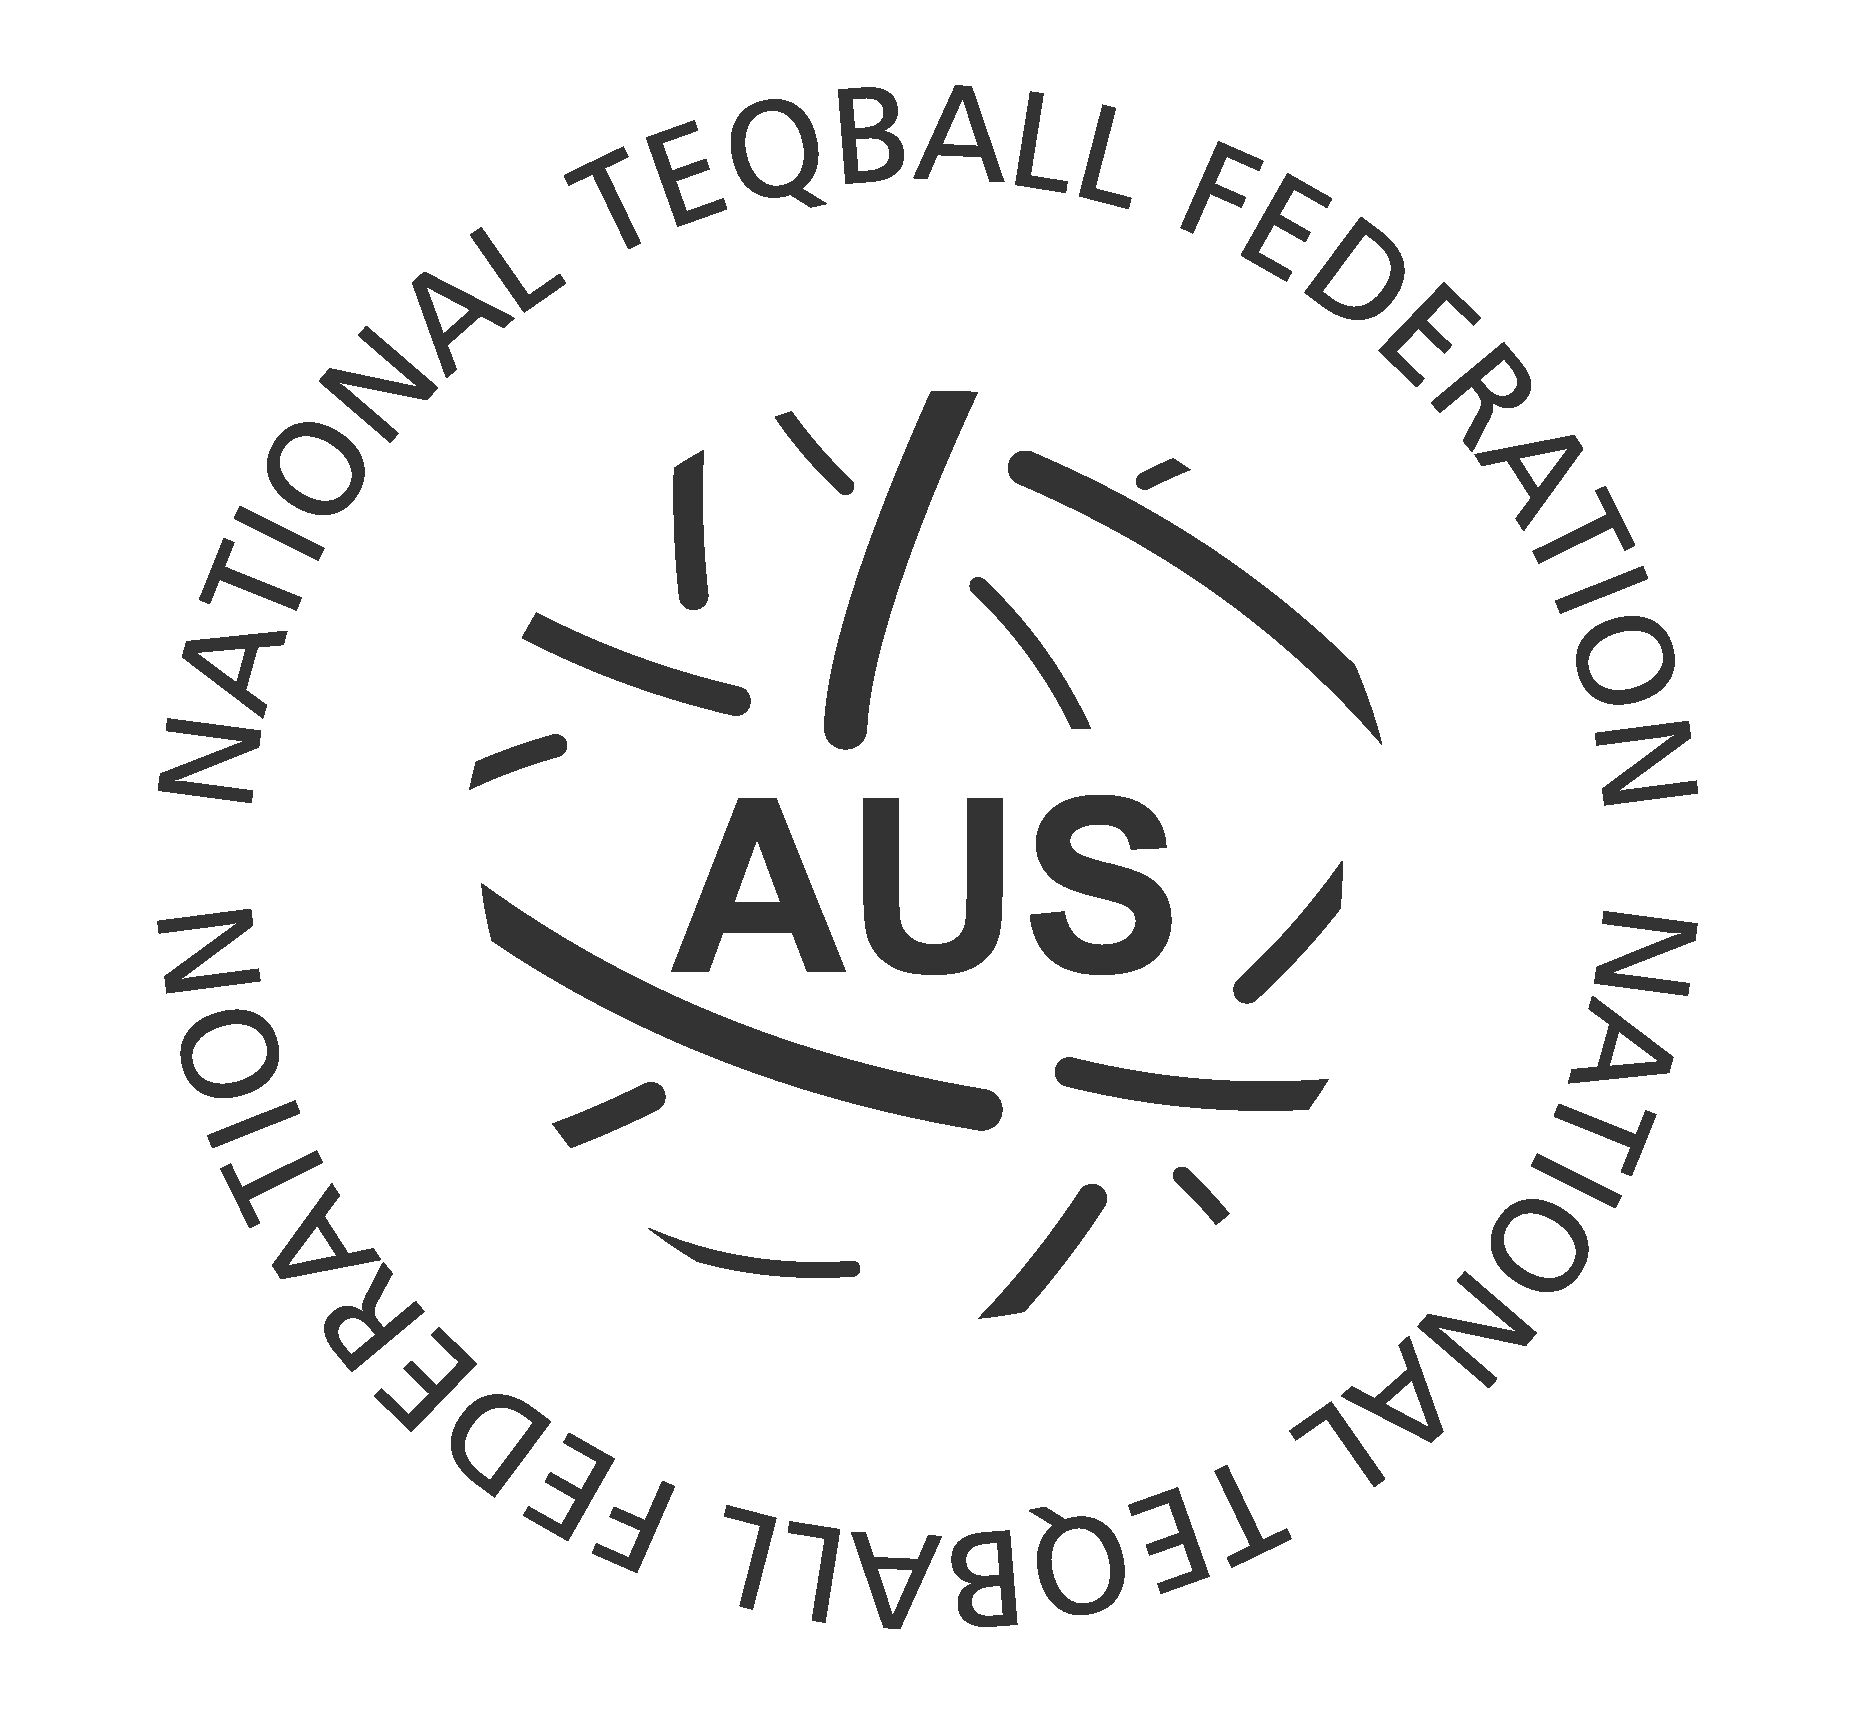 Australian Teqball Federation